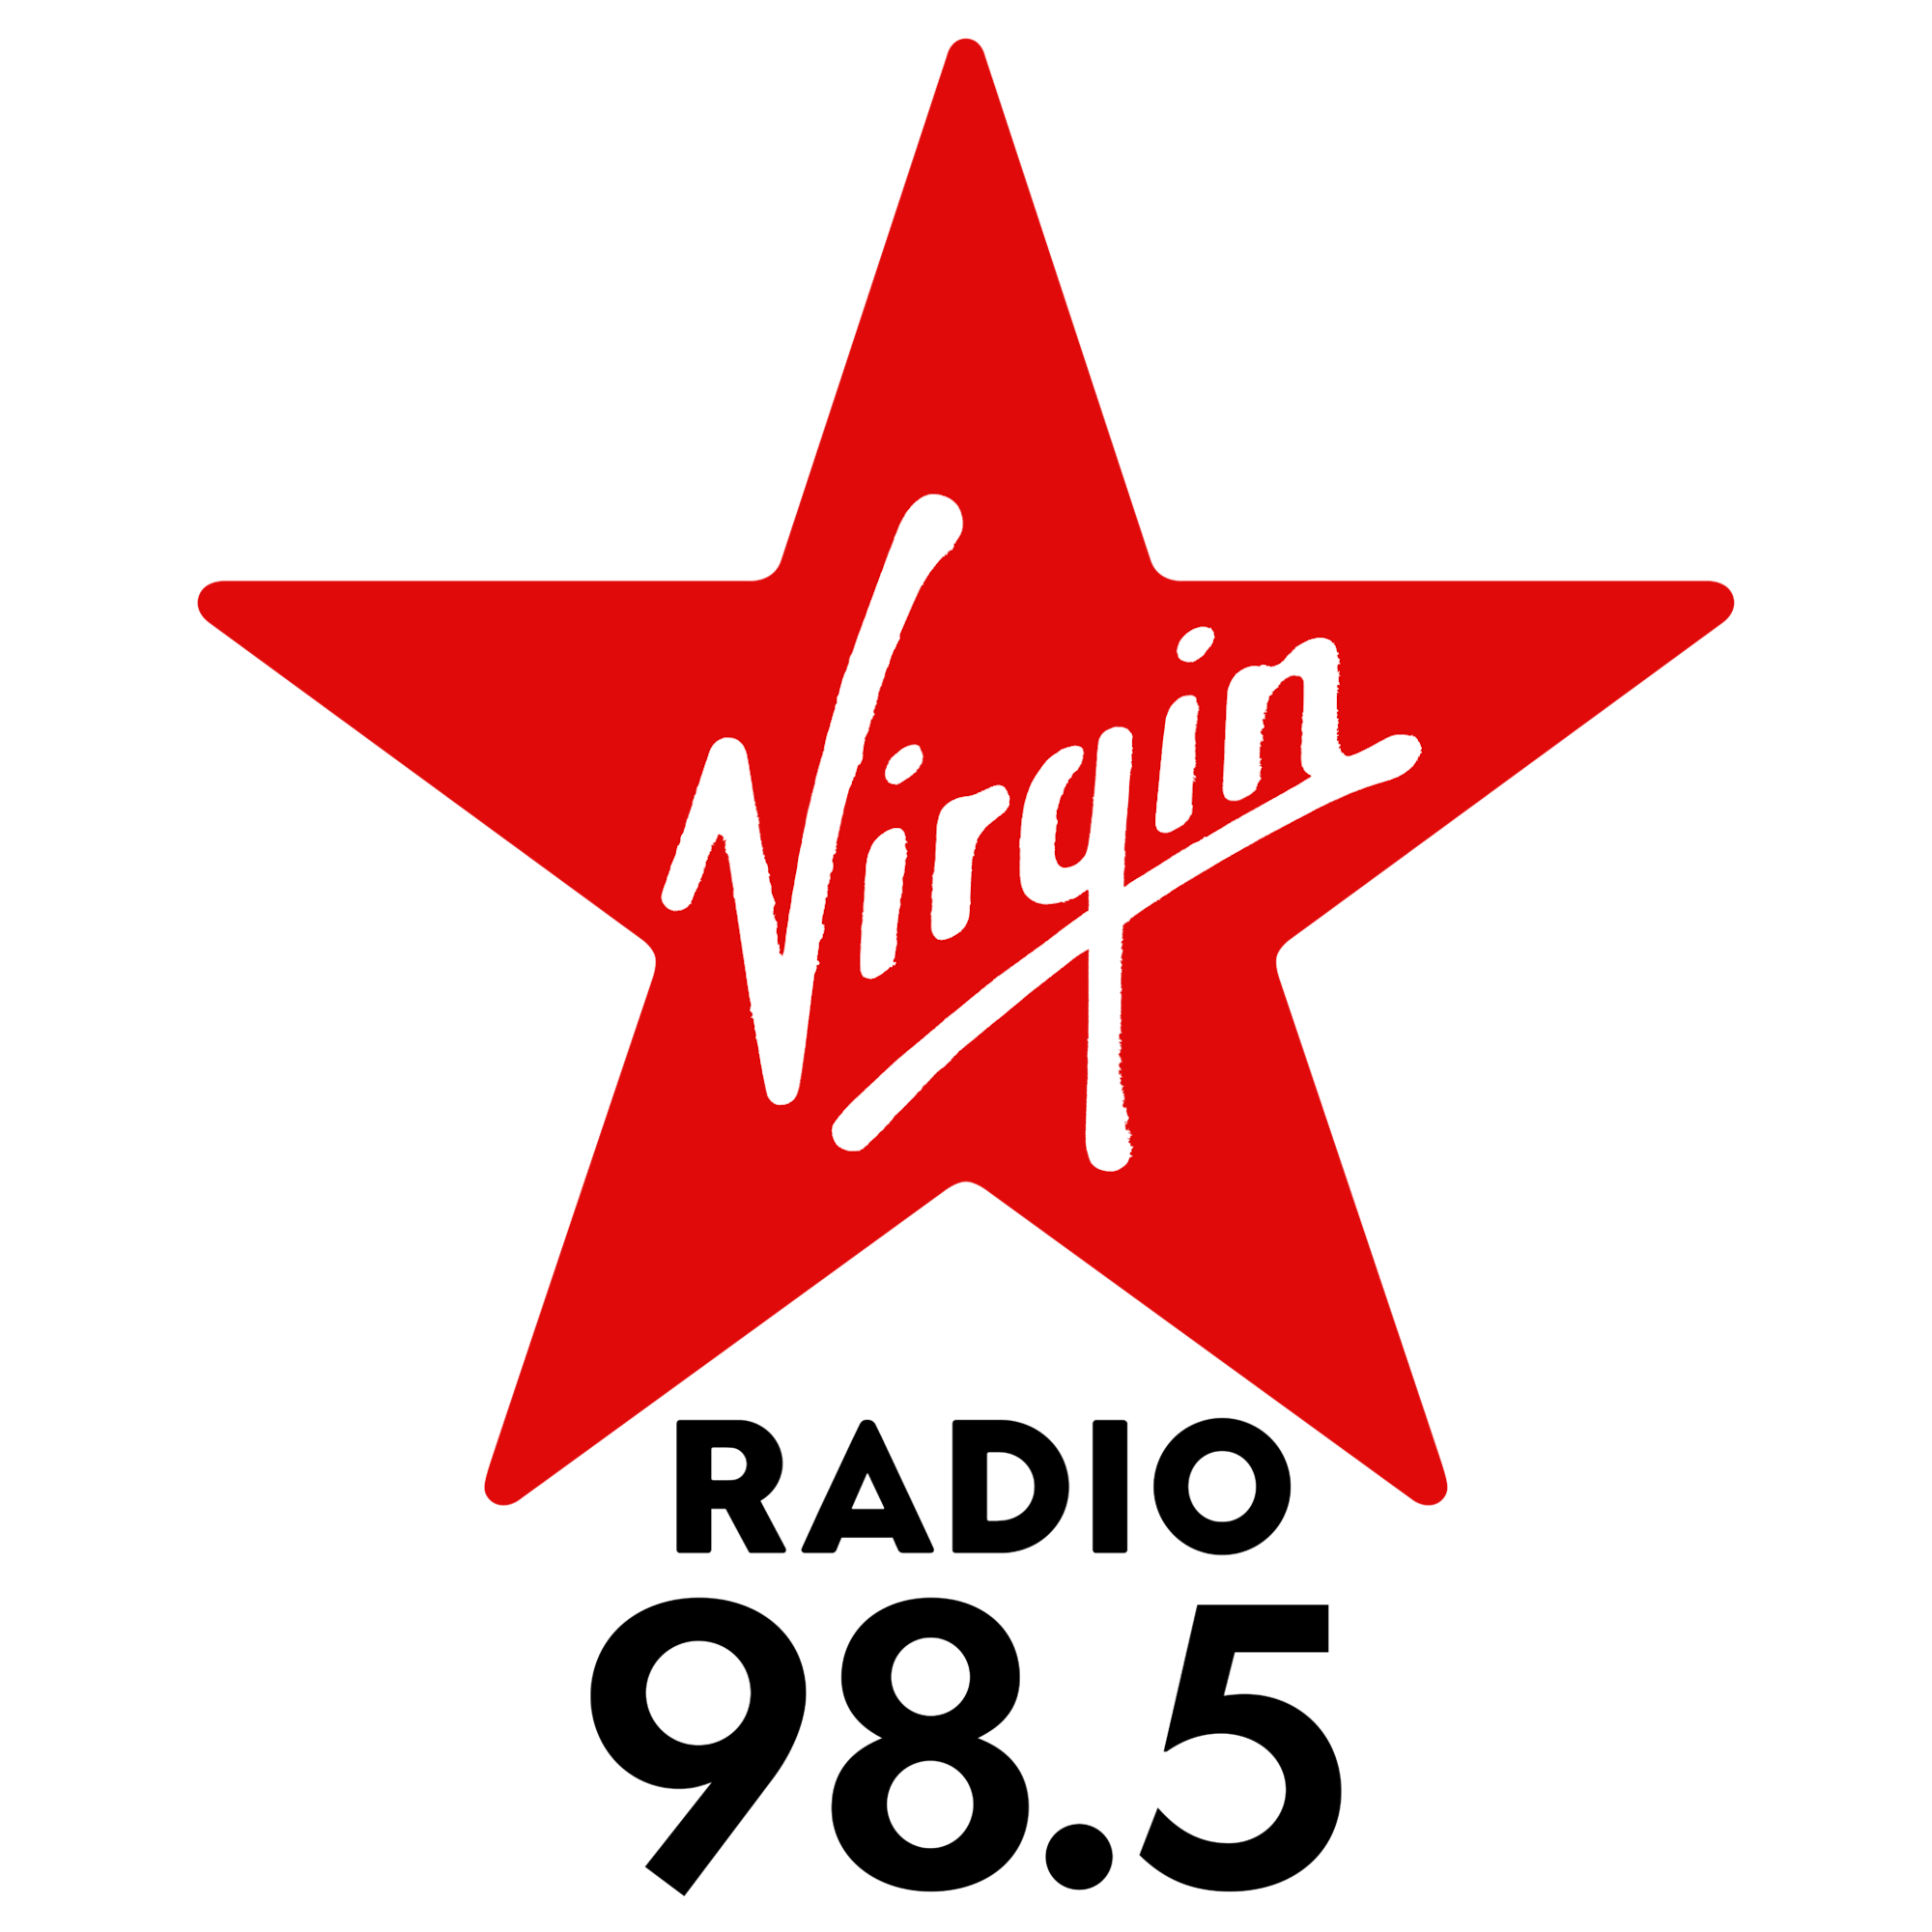 Virgin Radio 98.5 logo